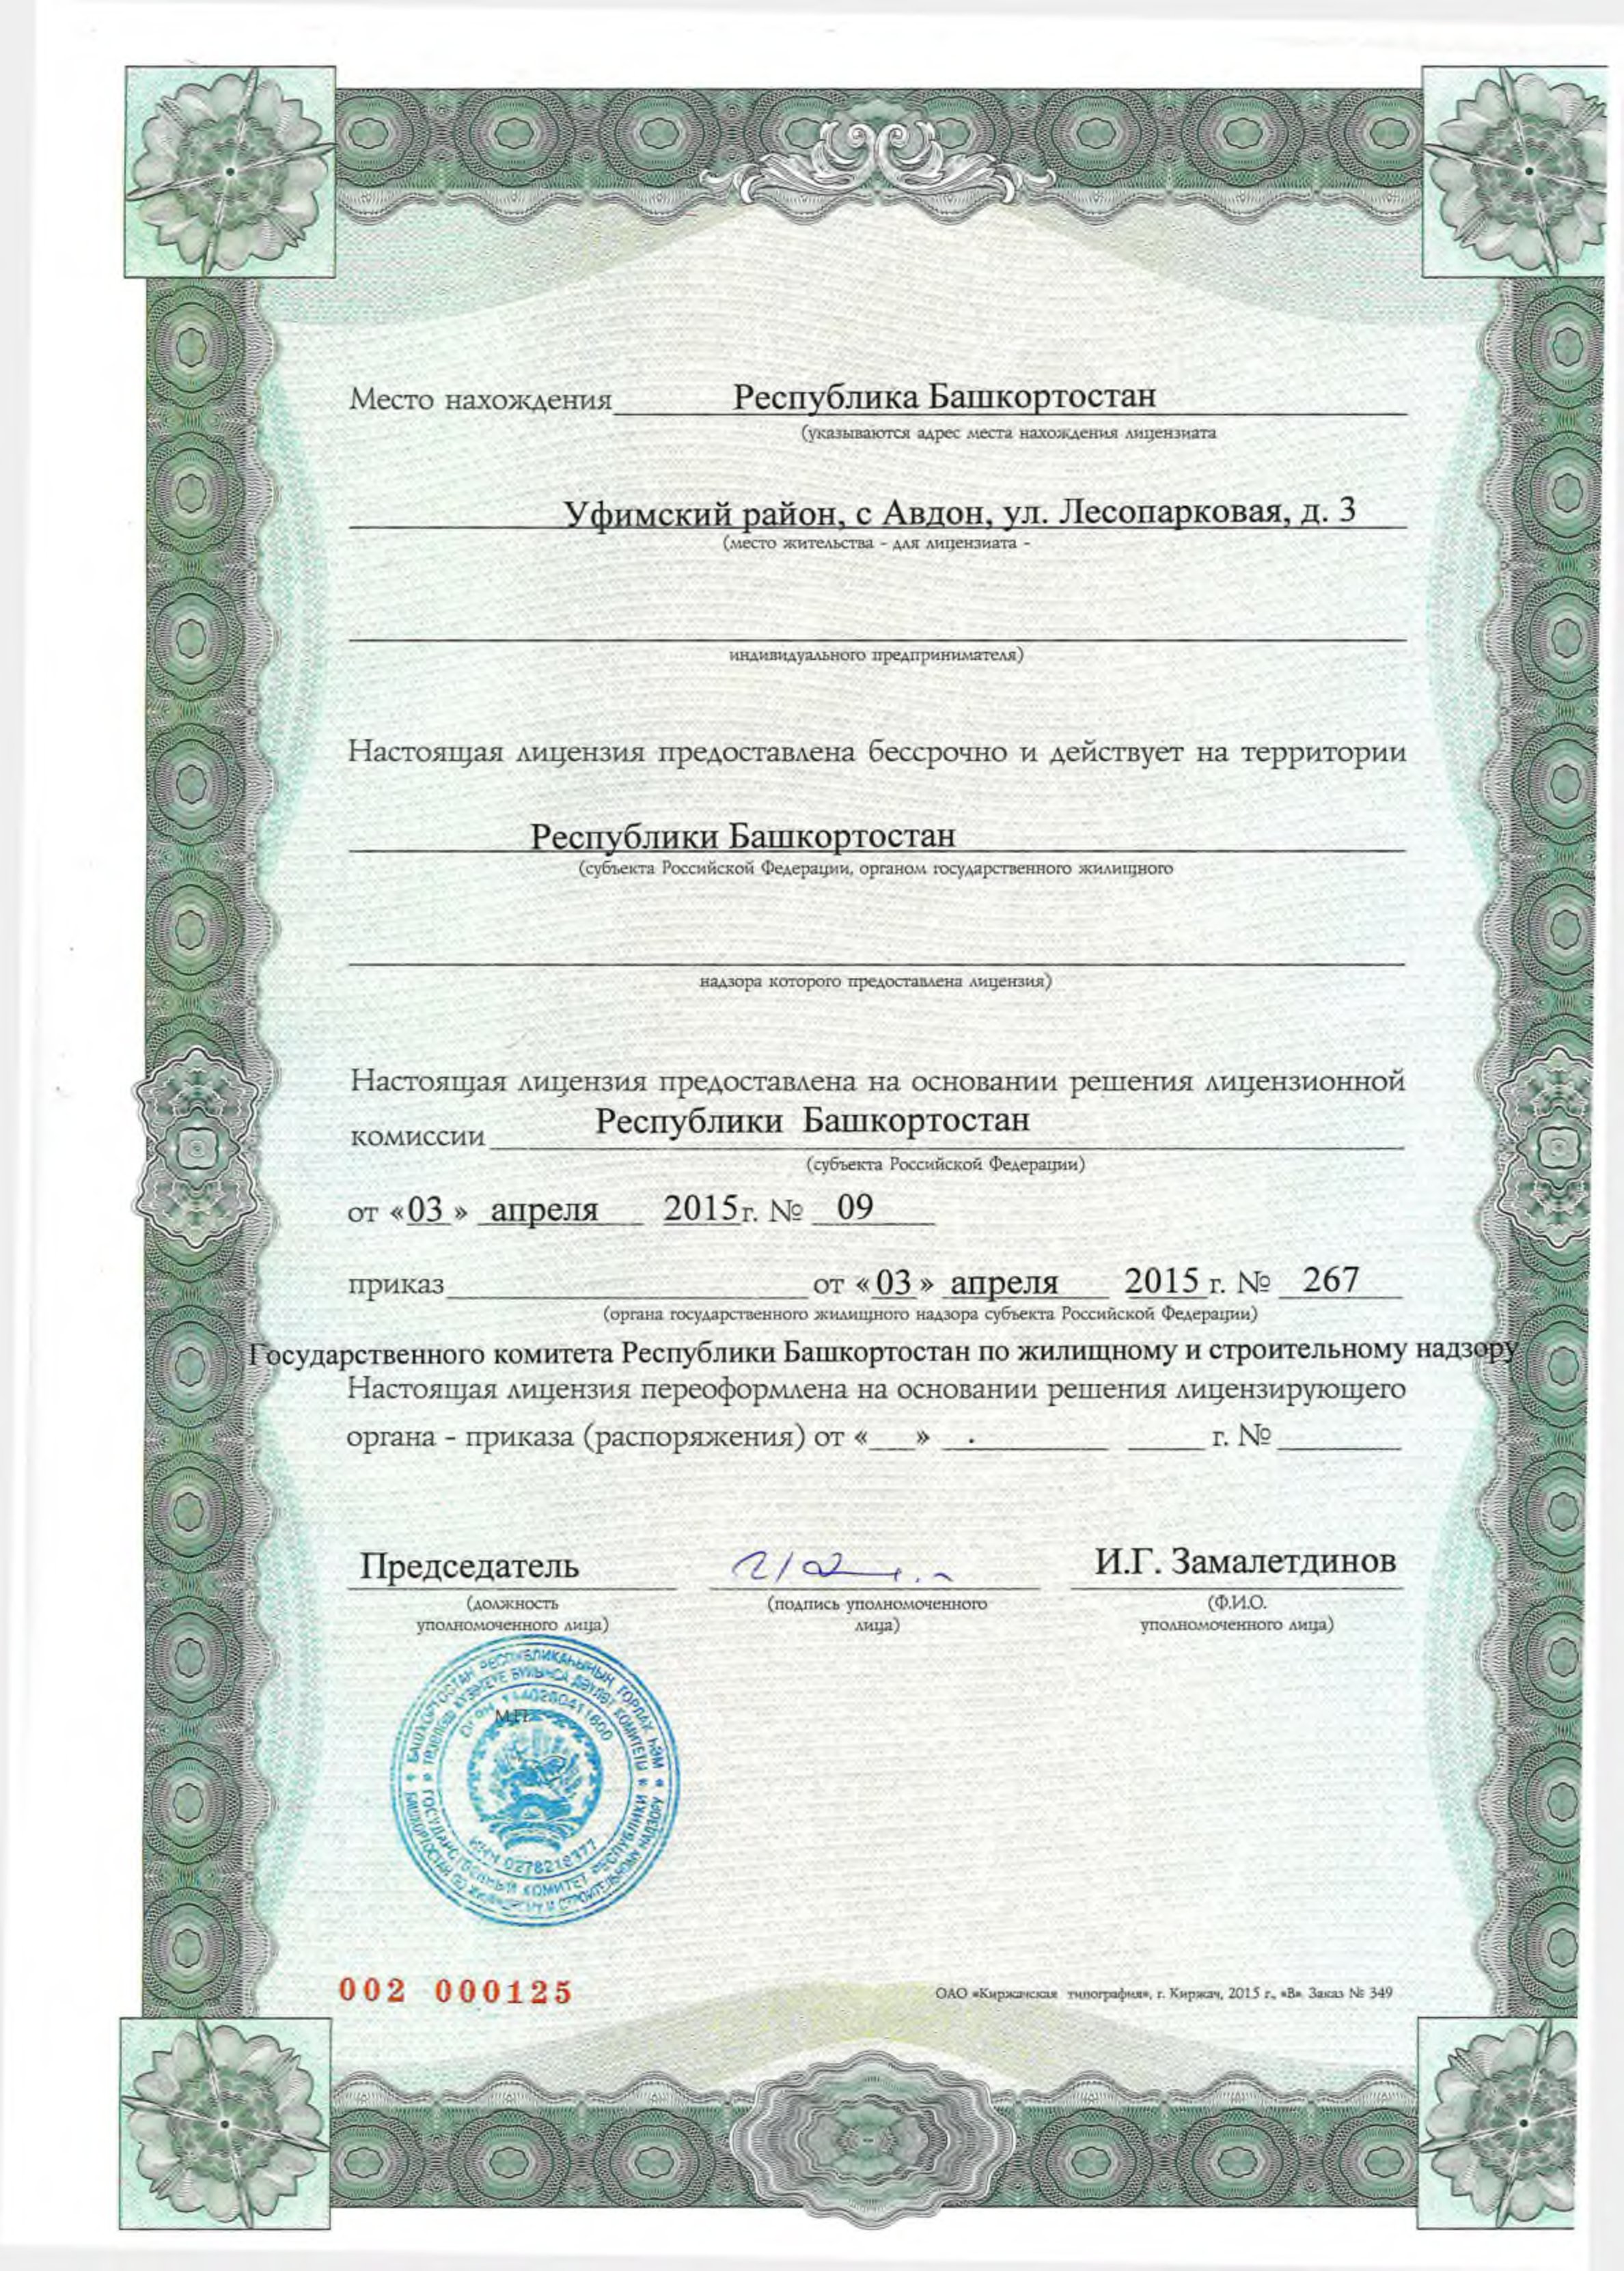 Лицензия на управление МКД №000125 от 03.04.2015